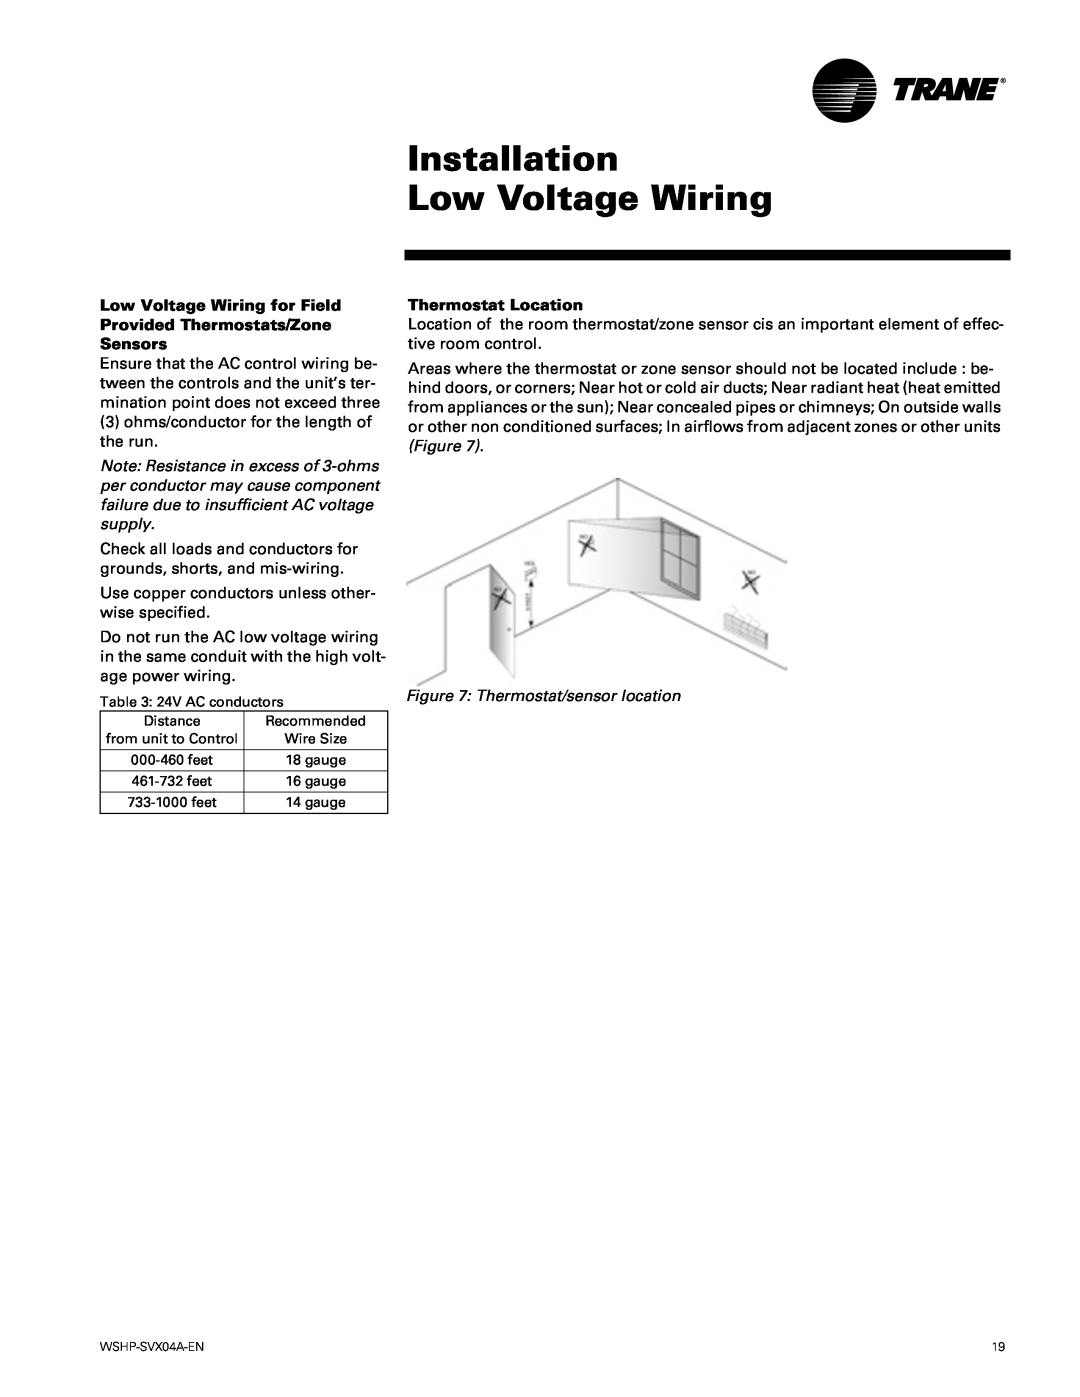 Trane WPVJ, WPHF manual Installation Low Voltage Wiring, Thermostat Location 